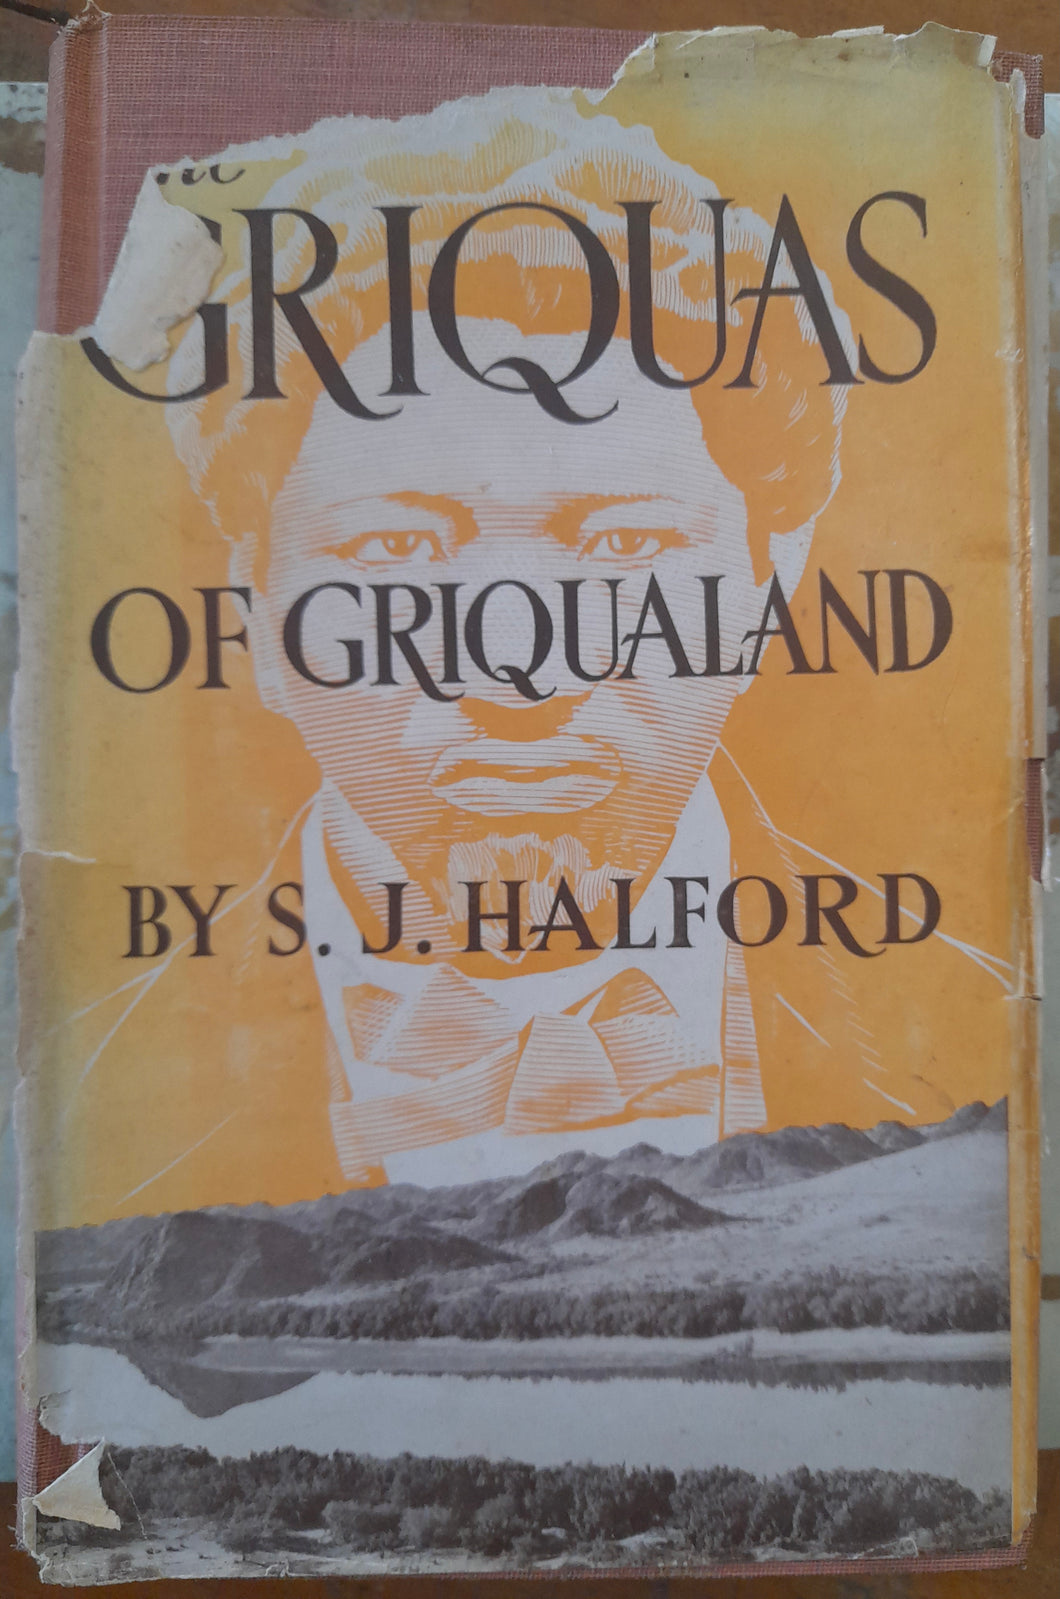 The Griquas of Griqualand - S.J. Halford